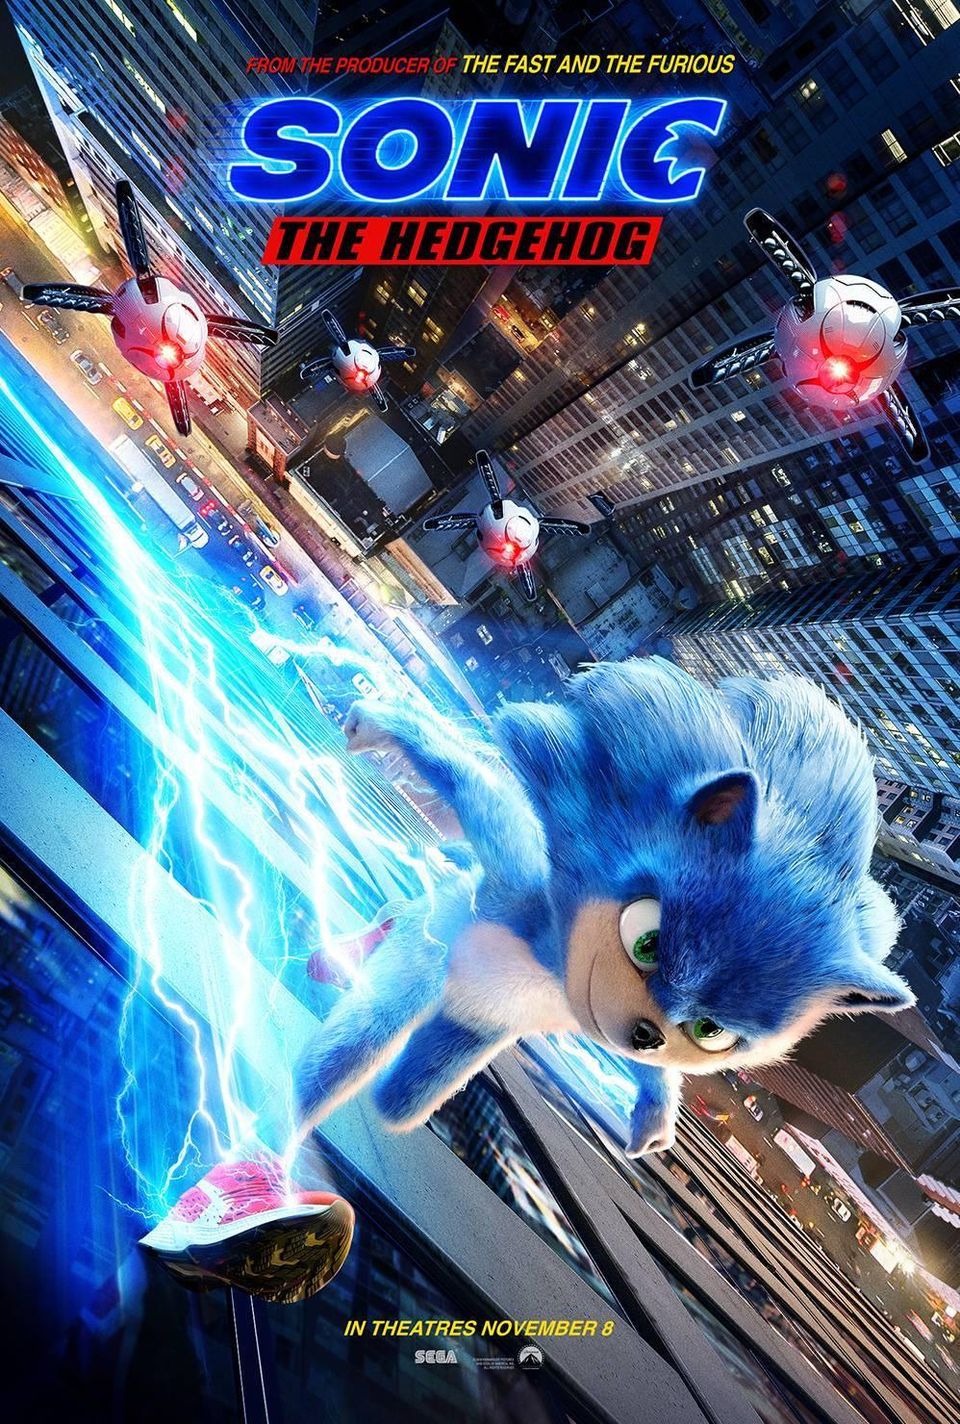 Sonic The Hedgehog Movie: Trailer, Release Date, Cast, & Description